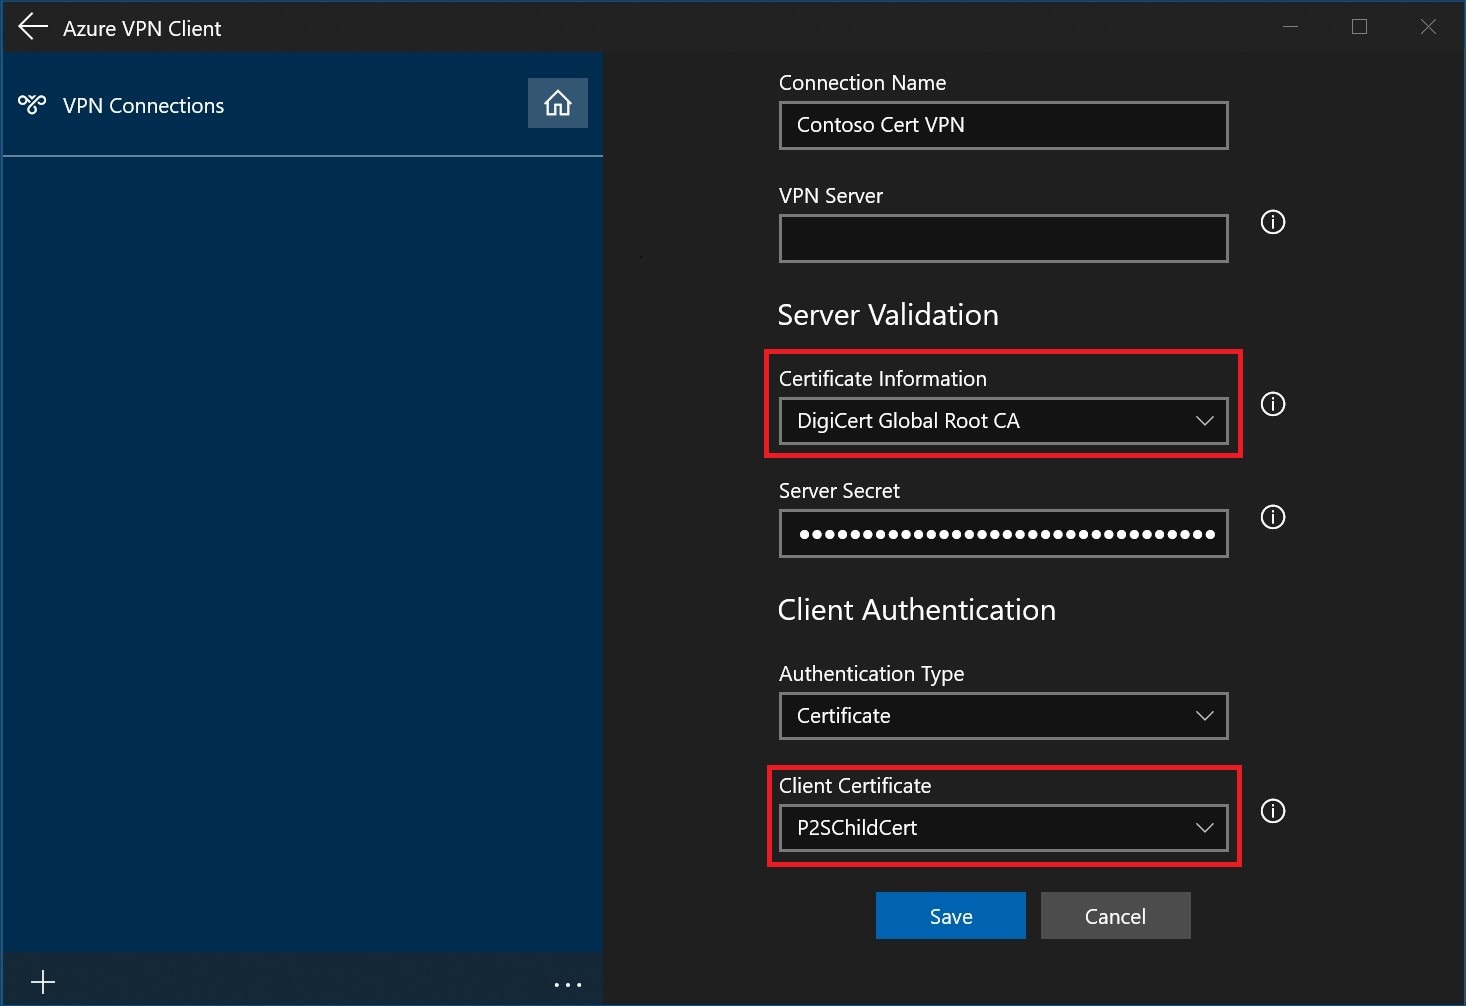 Screenshot showing Azure VPN Client profile configuration page.